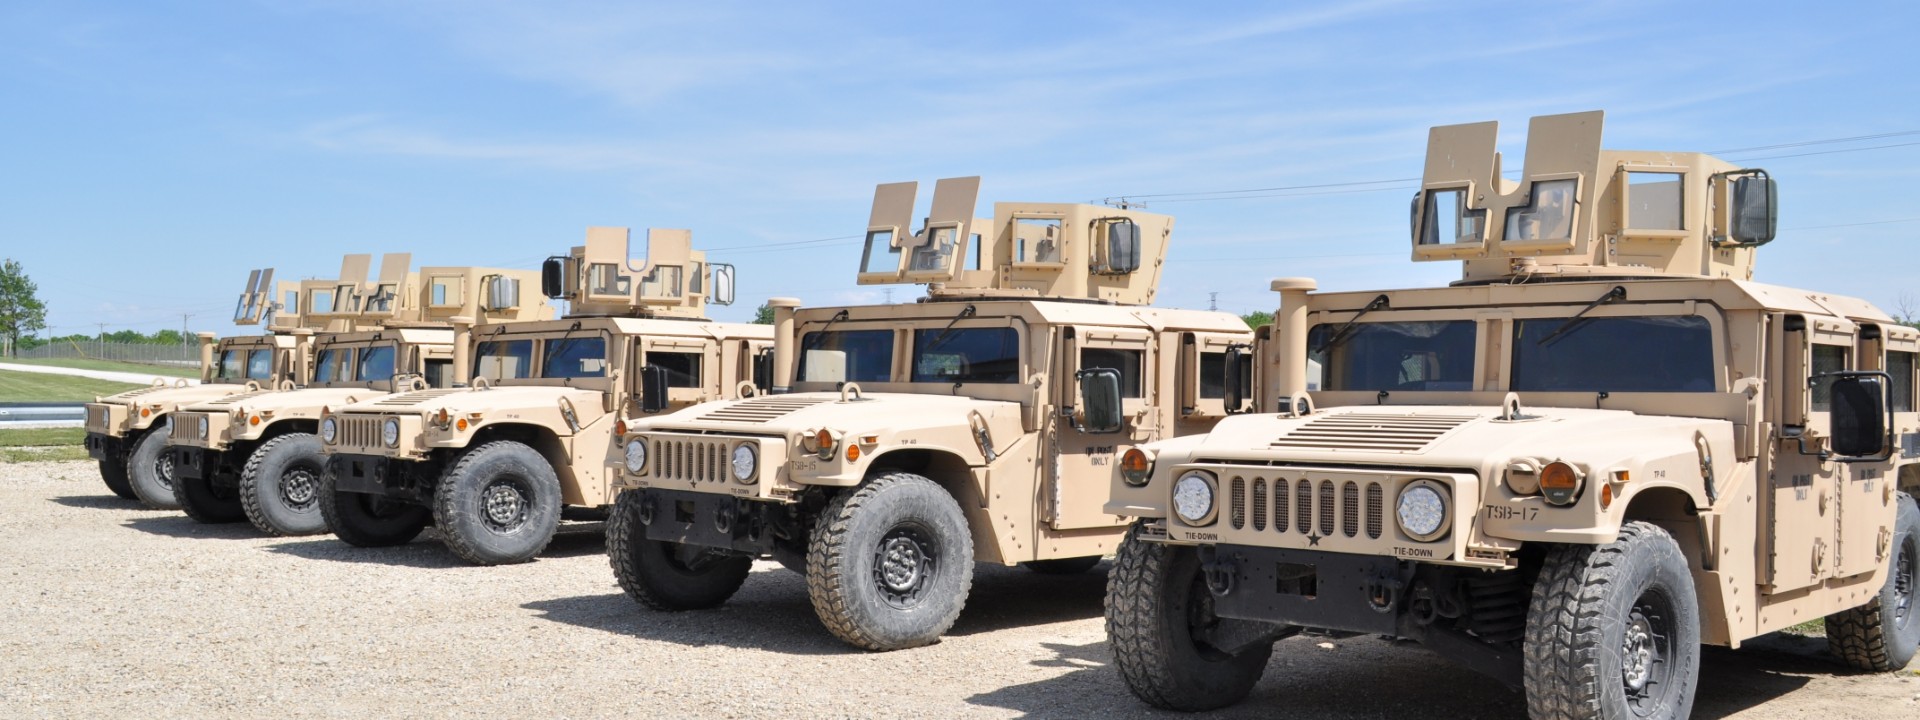 Military Humvees